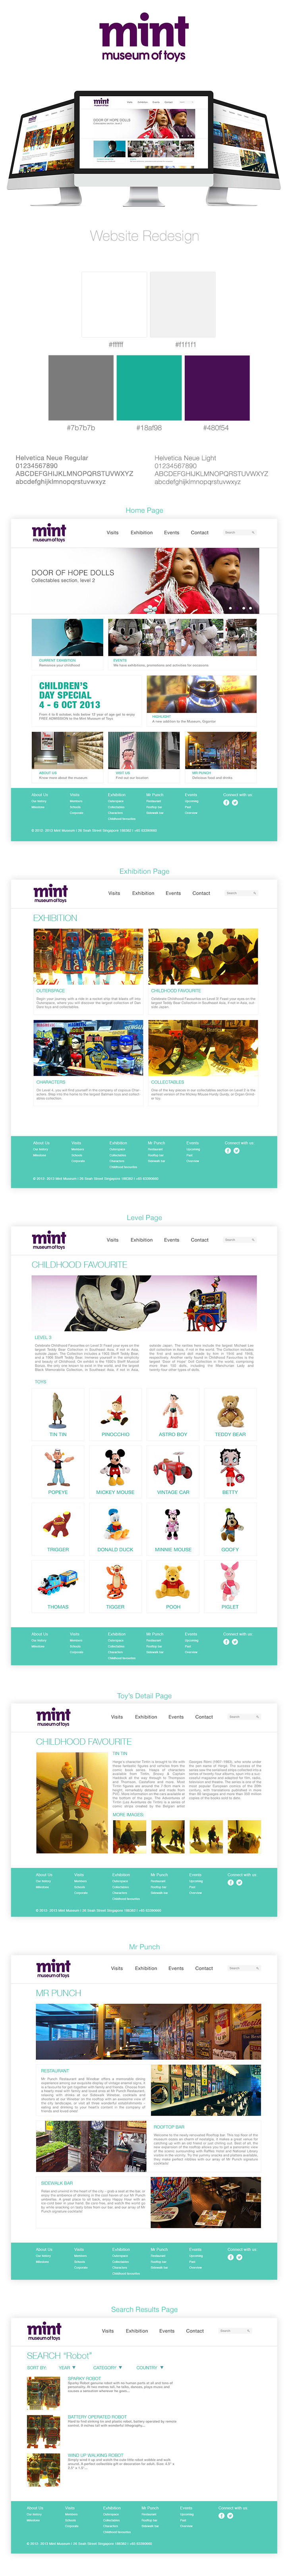 mint museum toys Website redesign minimalist graphic clean minimal sleek White